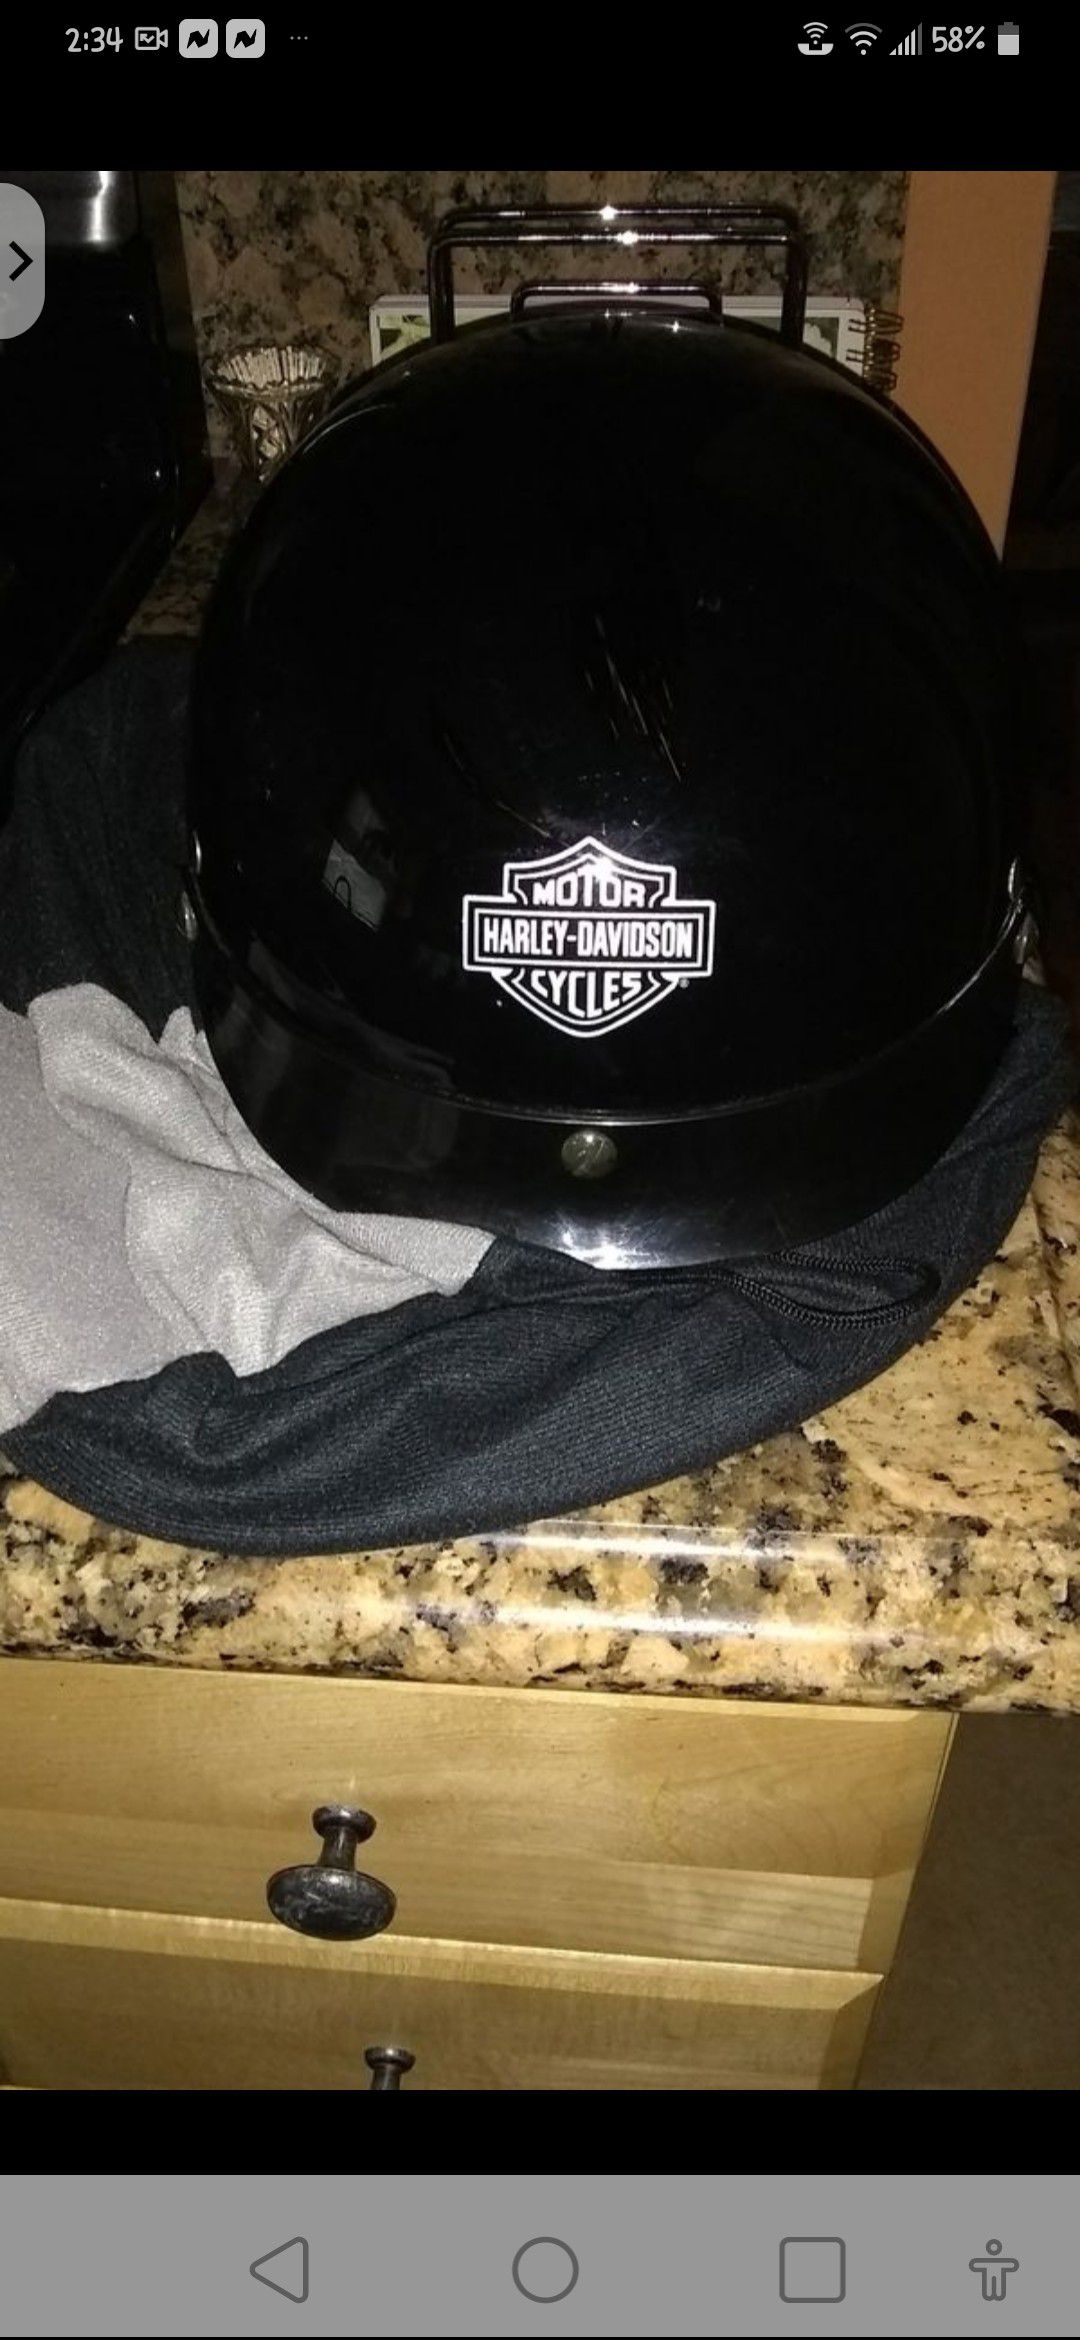 Harley Davidson helmet size small